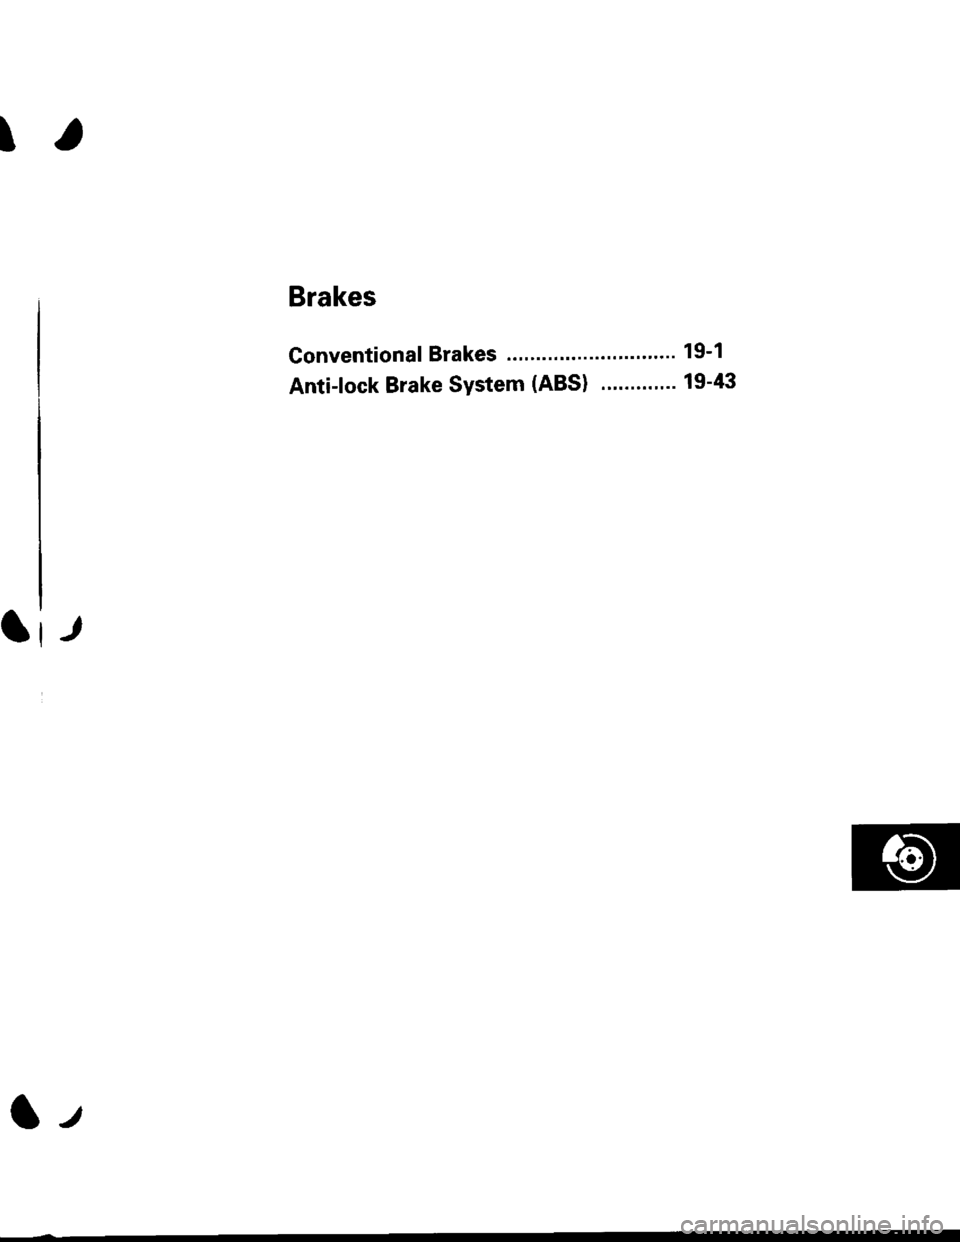 HONDA CIVIC 2000 6.G Workshop Manual t
Brakes
Conventional Brakes ..."... 19-1
Anti-lock Brake System (ABS) ."......".. 19-43
It-,
lt 